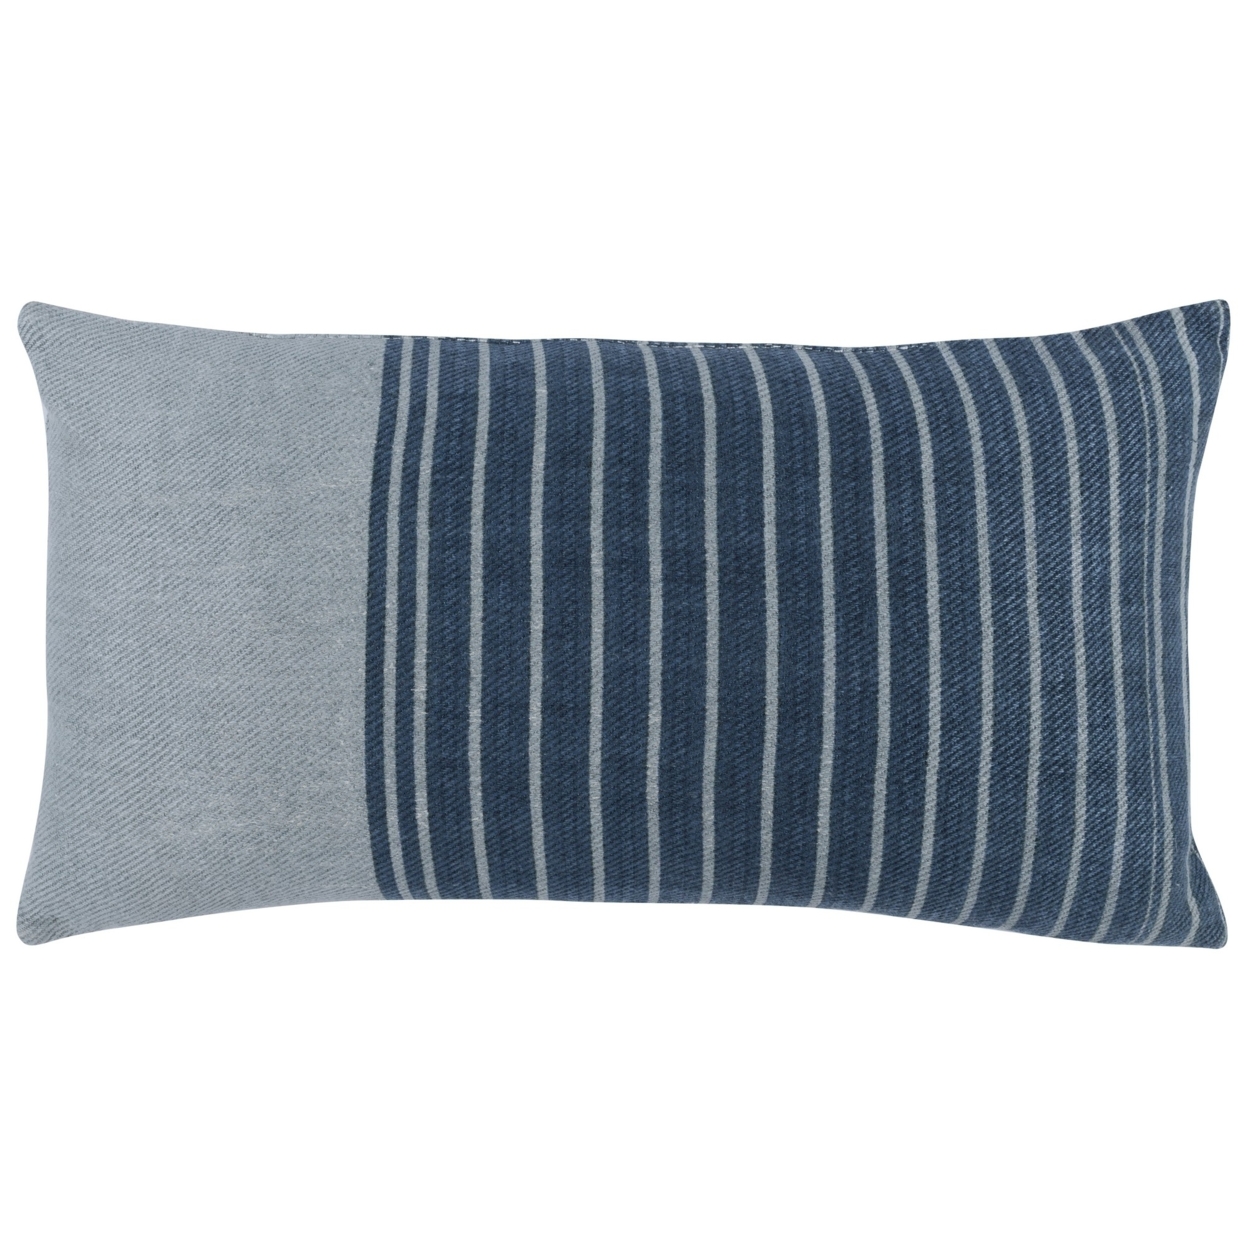 14 X 26 Linen Twill Accent Throw Pillow, Hand Printed Stripe Design, Gray, Saltoro Sherpi